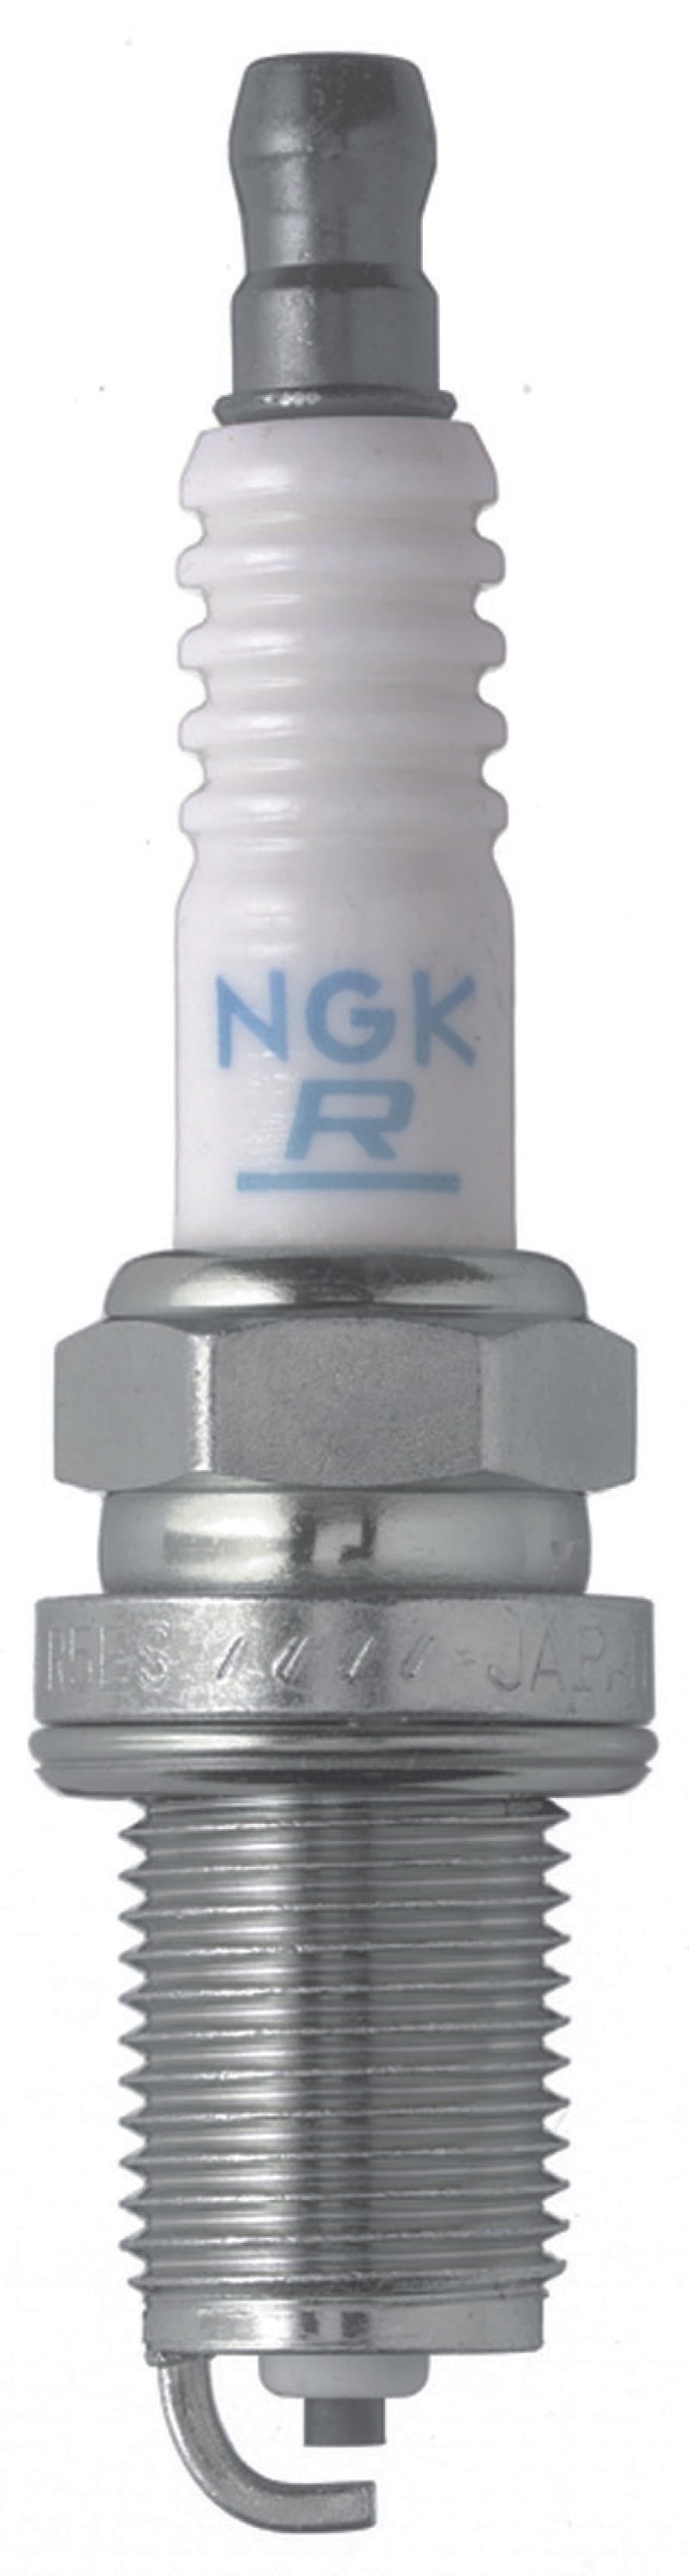 NGK Copper Spark Plug Box of 4 (BKR7E)